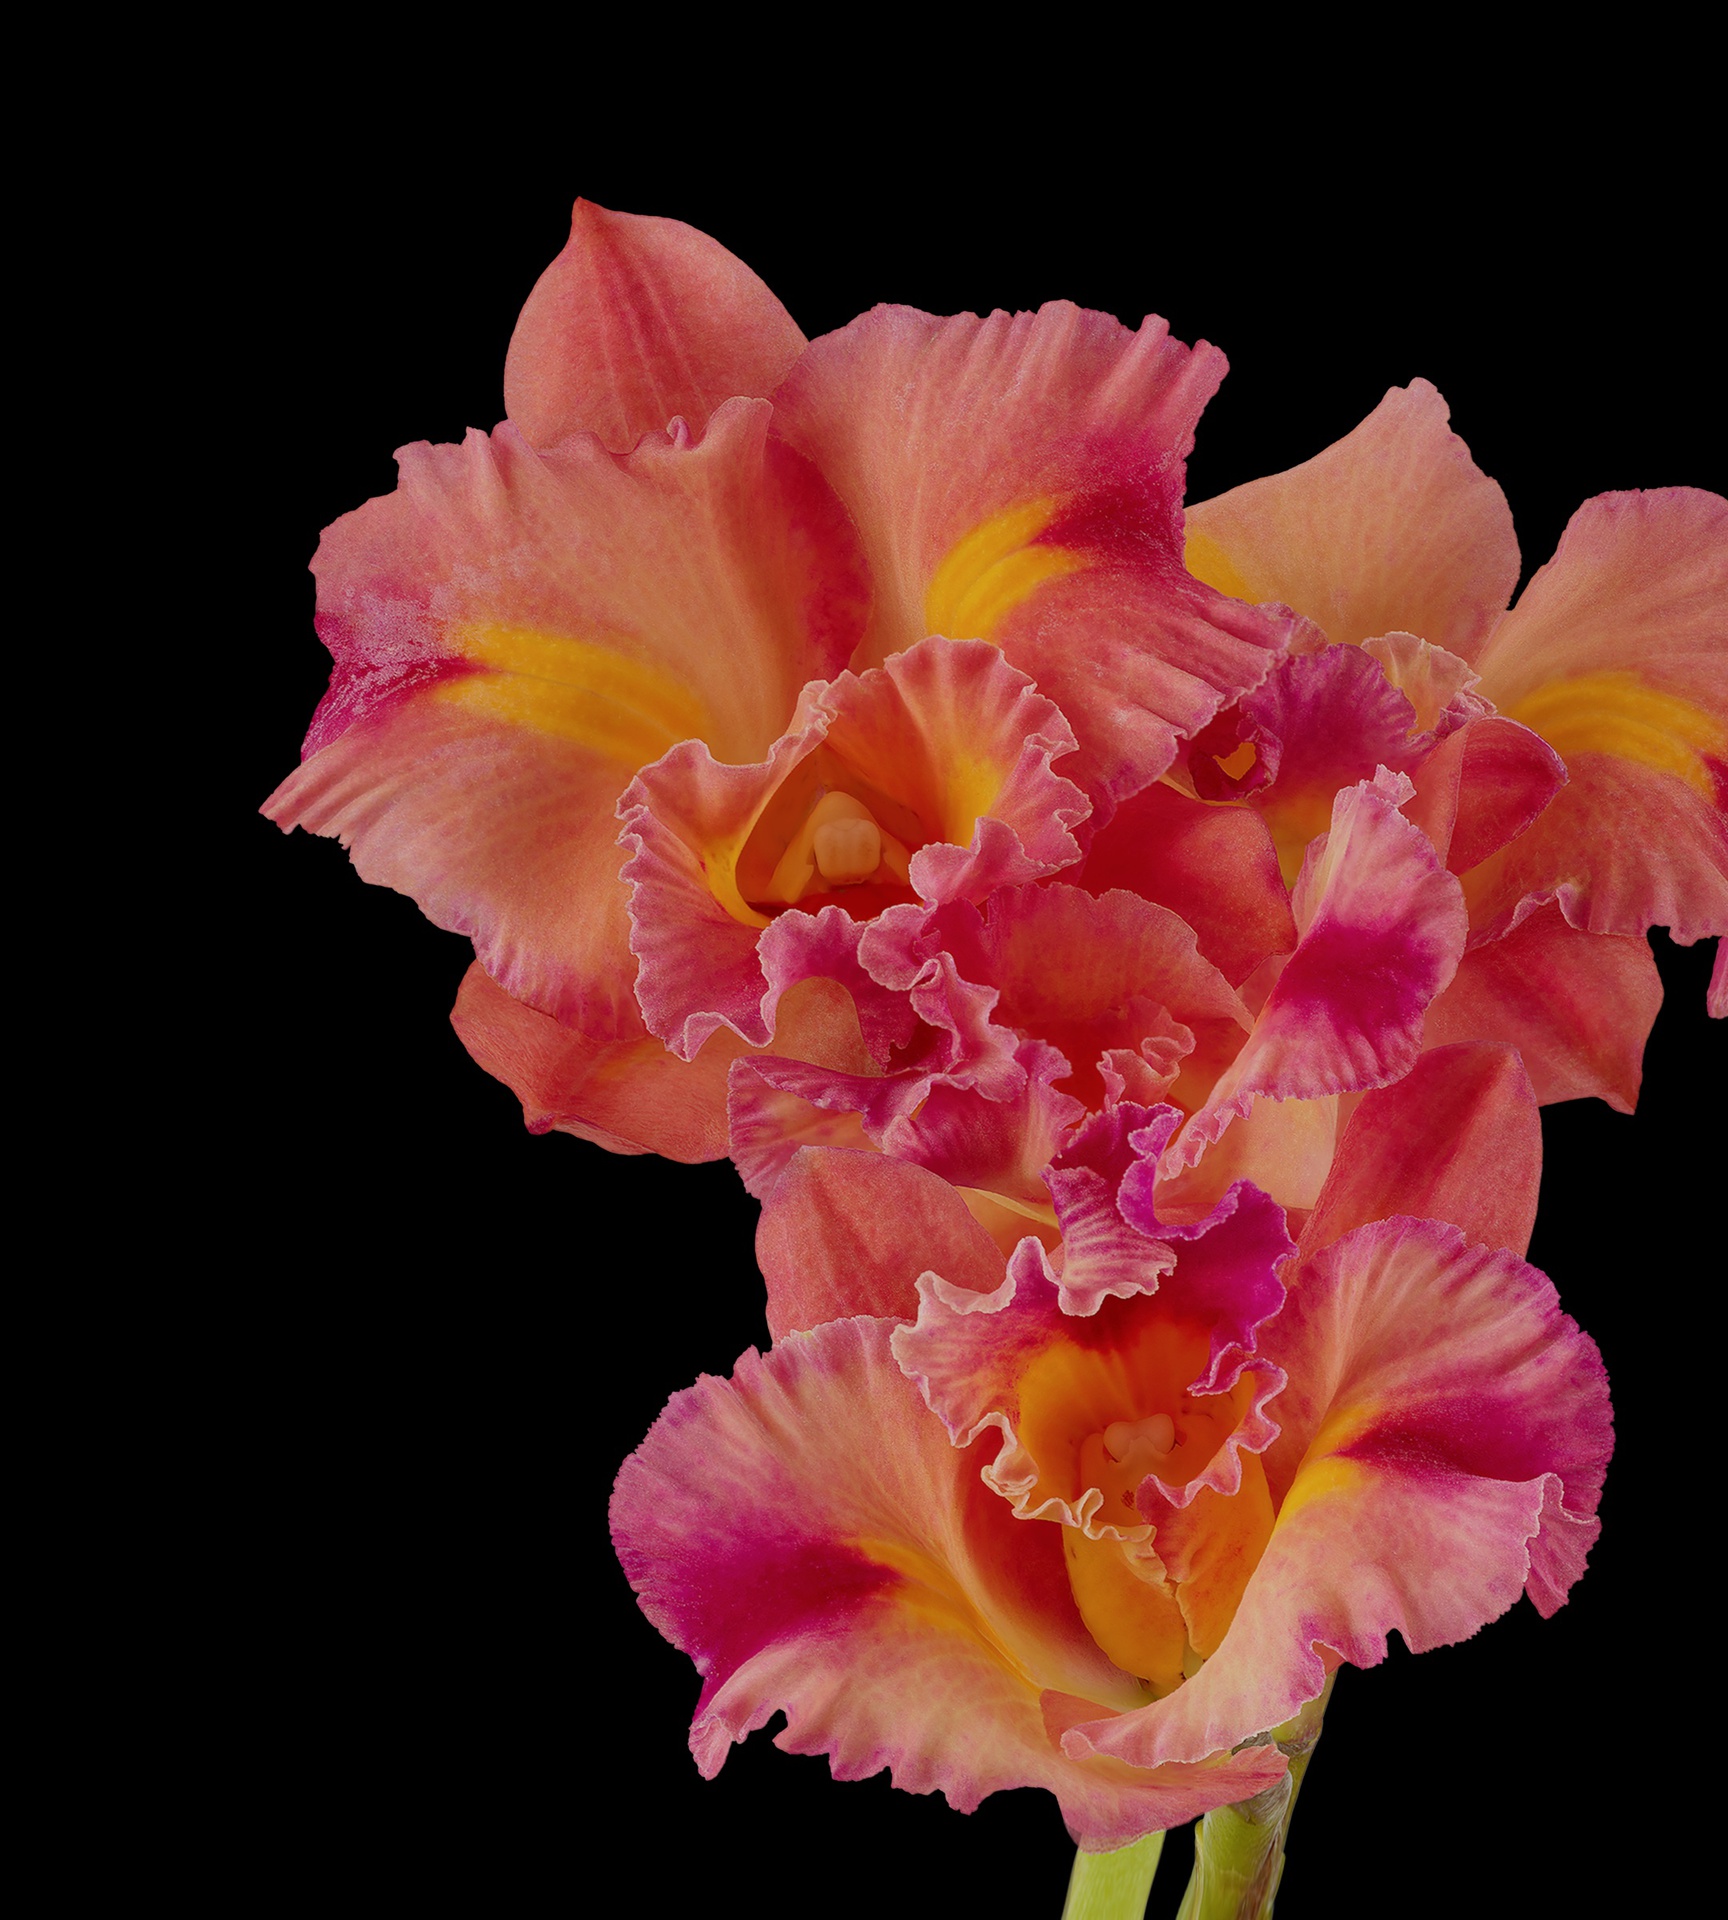 Pixel 6 Pro Wallpaper Cattleya Orchid dark by Andrew Zuckerman